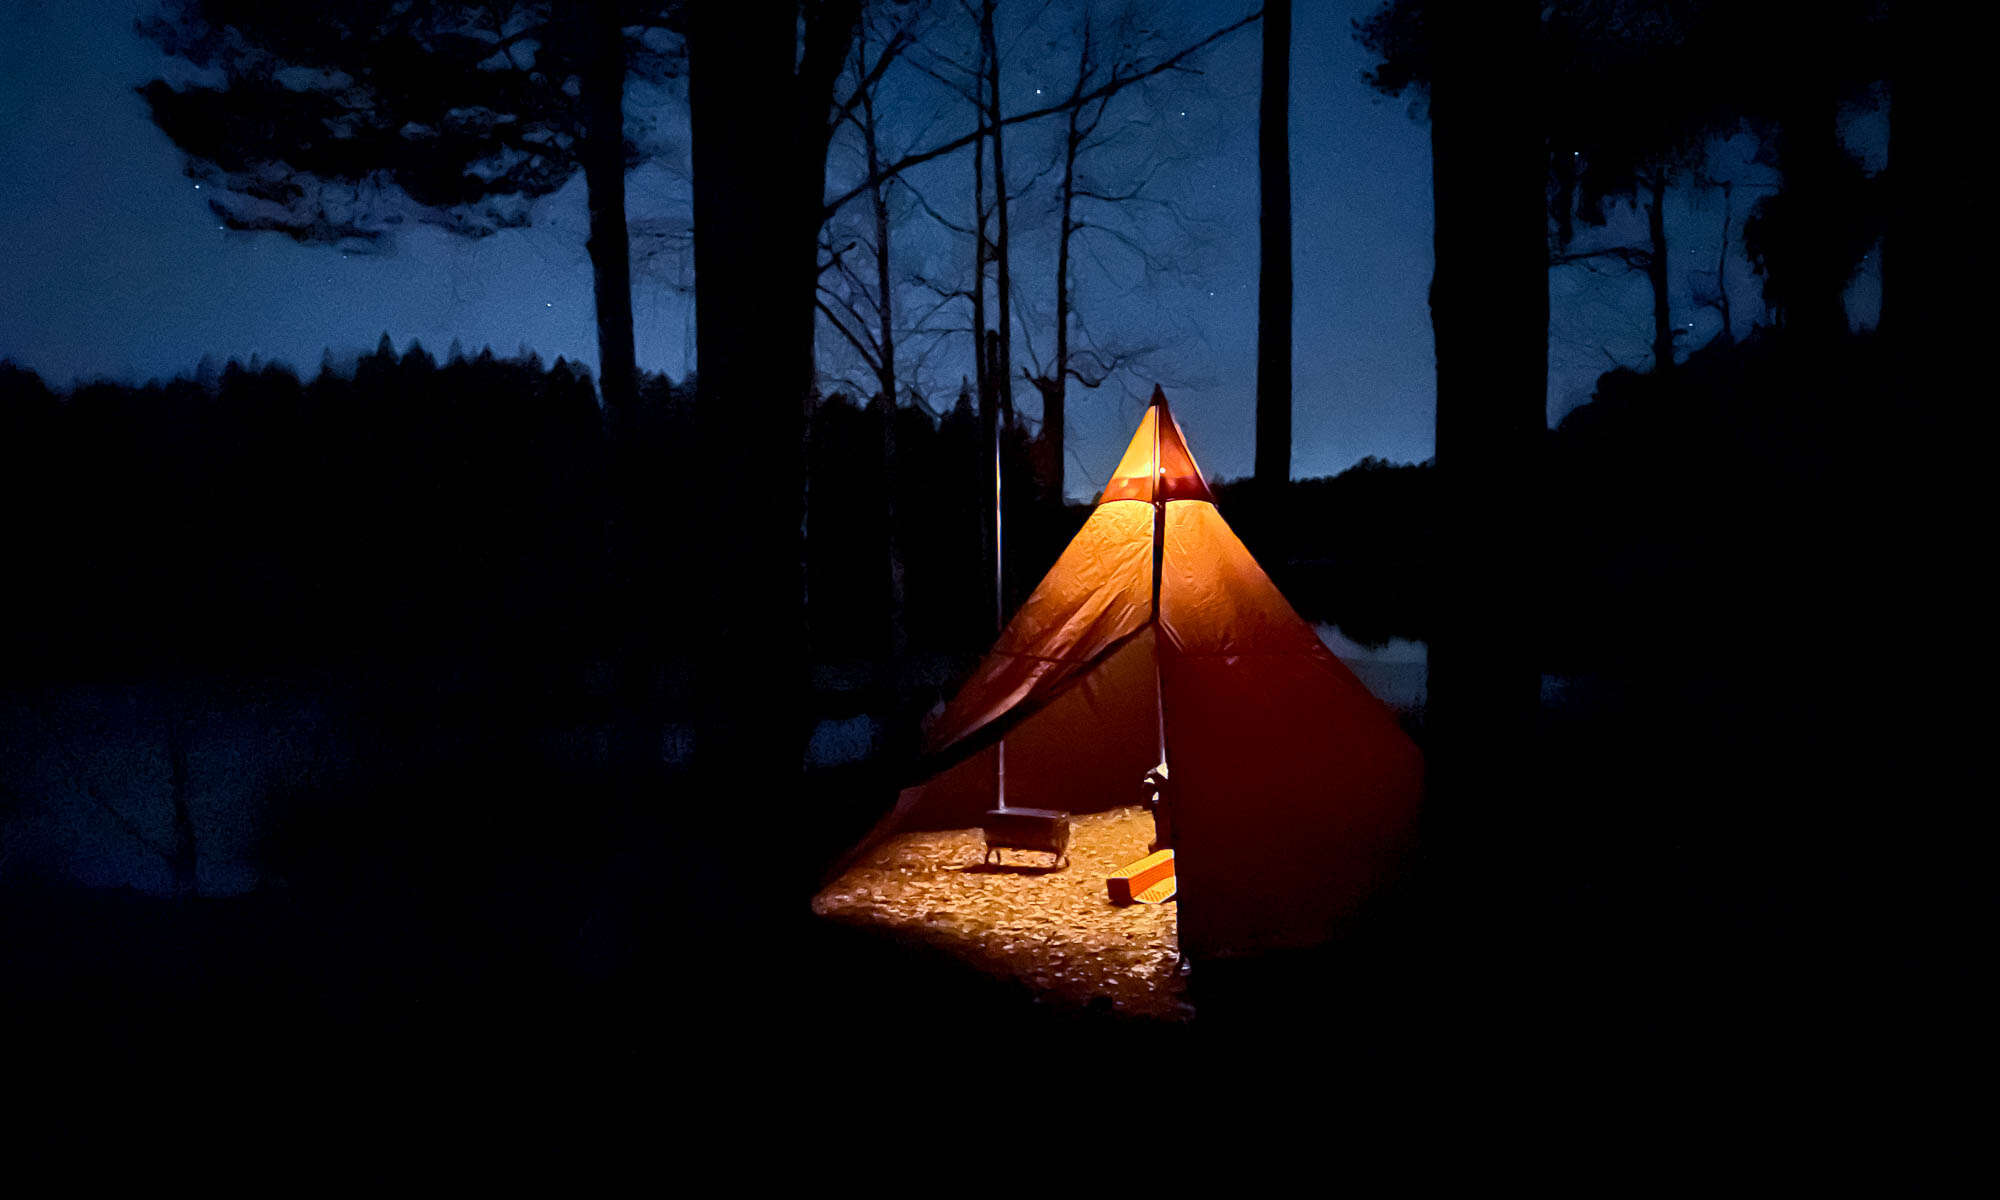 Hot tent winter camping in Nuuksio National Park near Helsinki